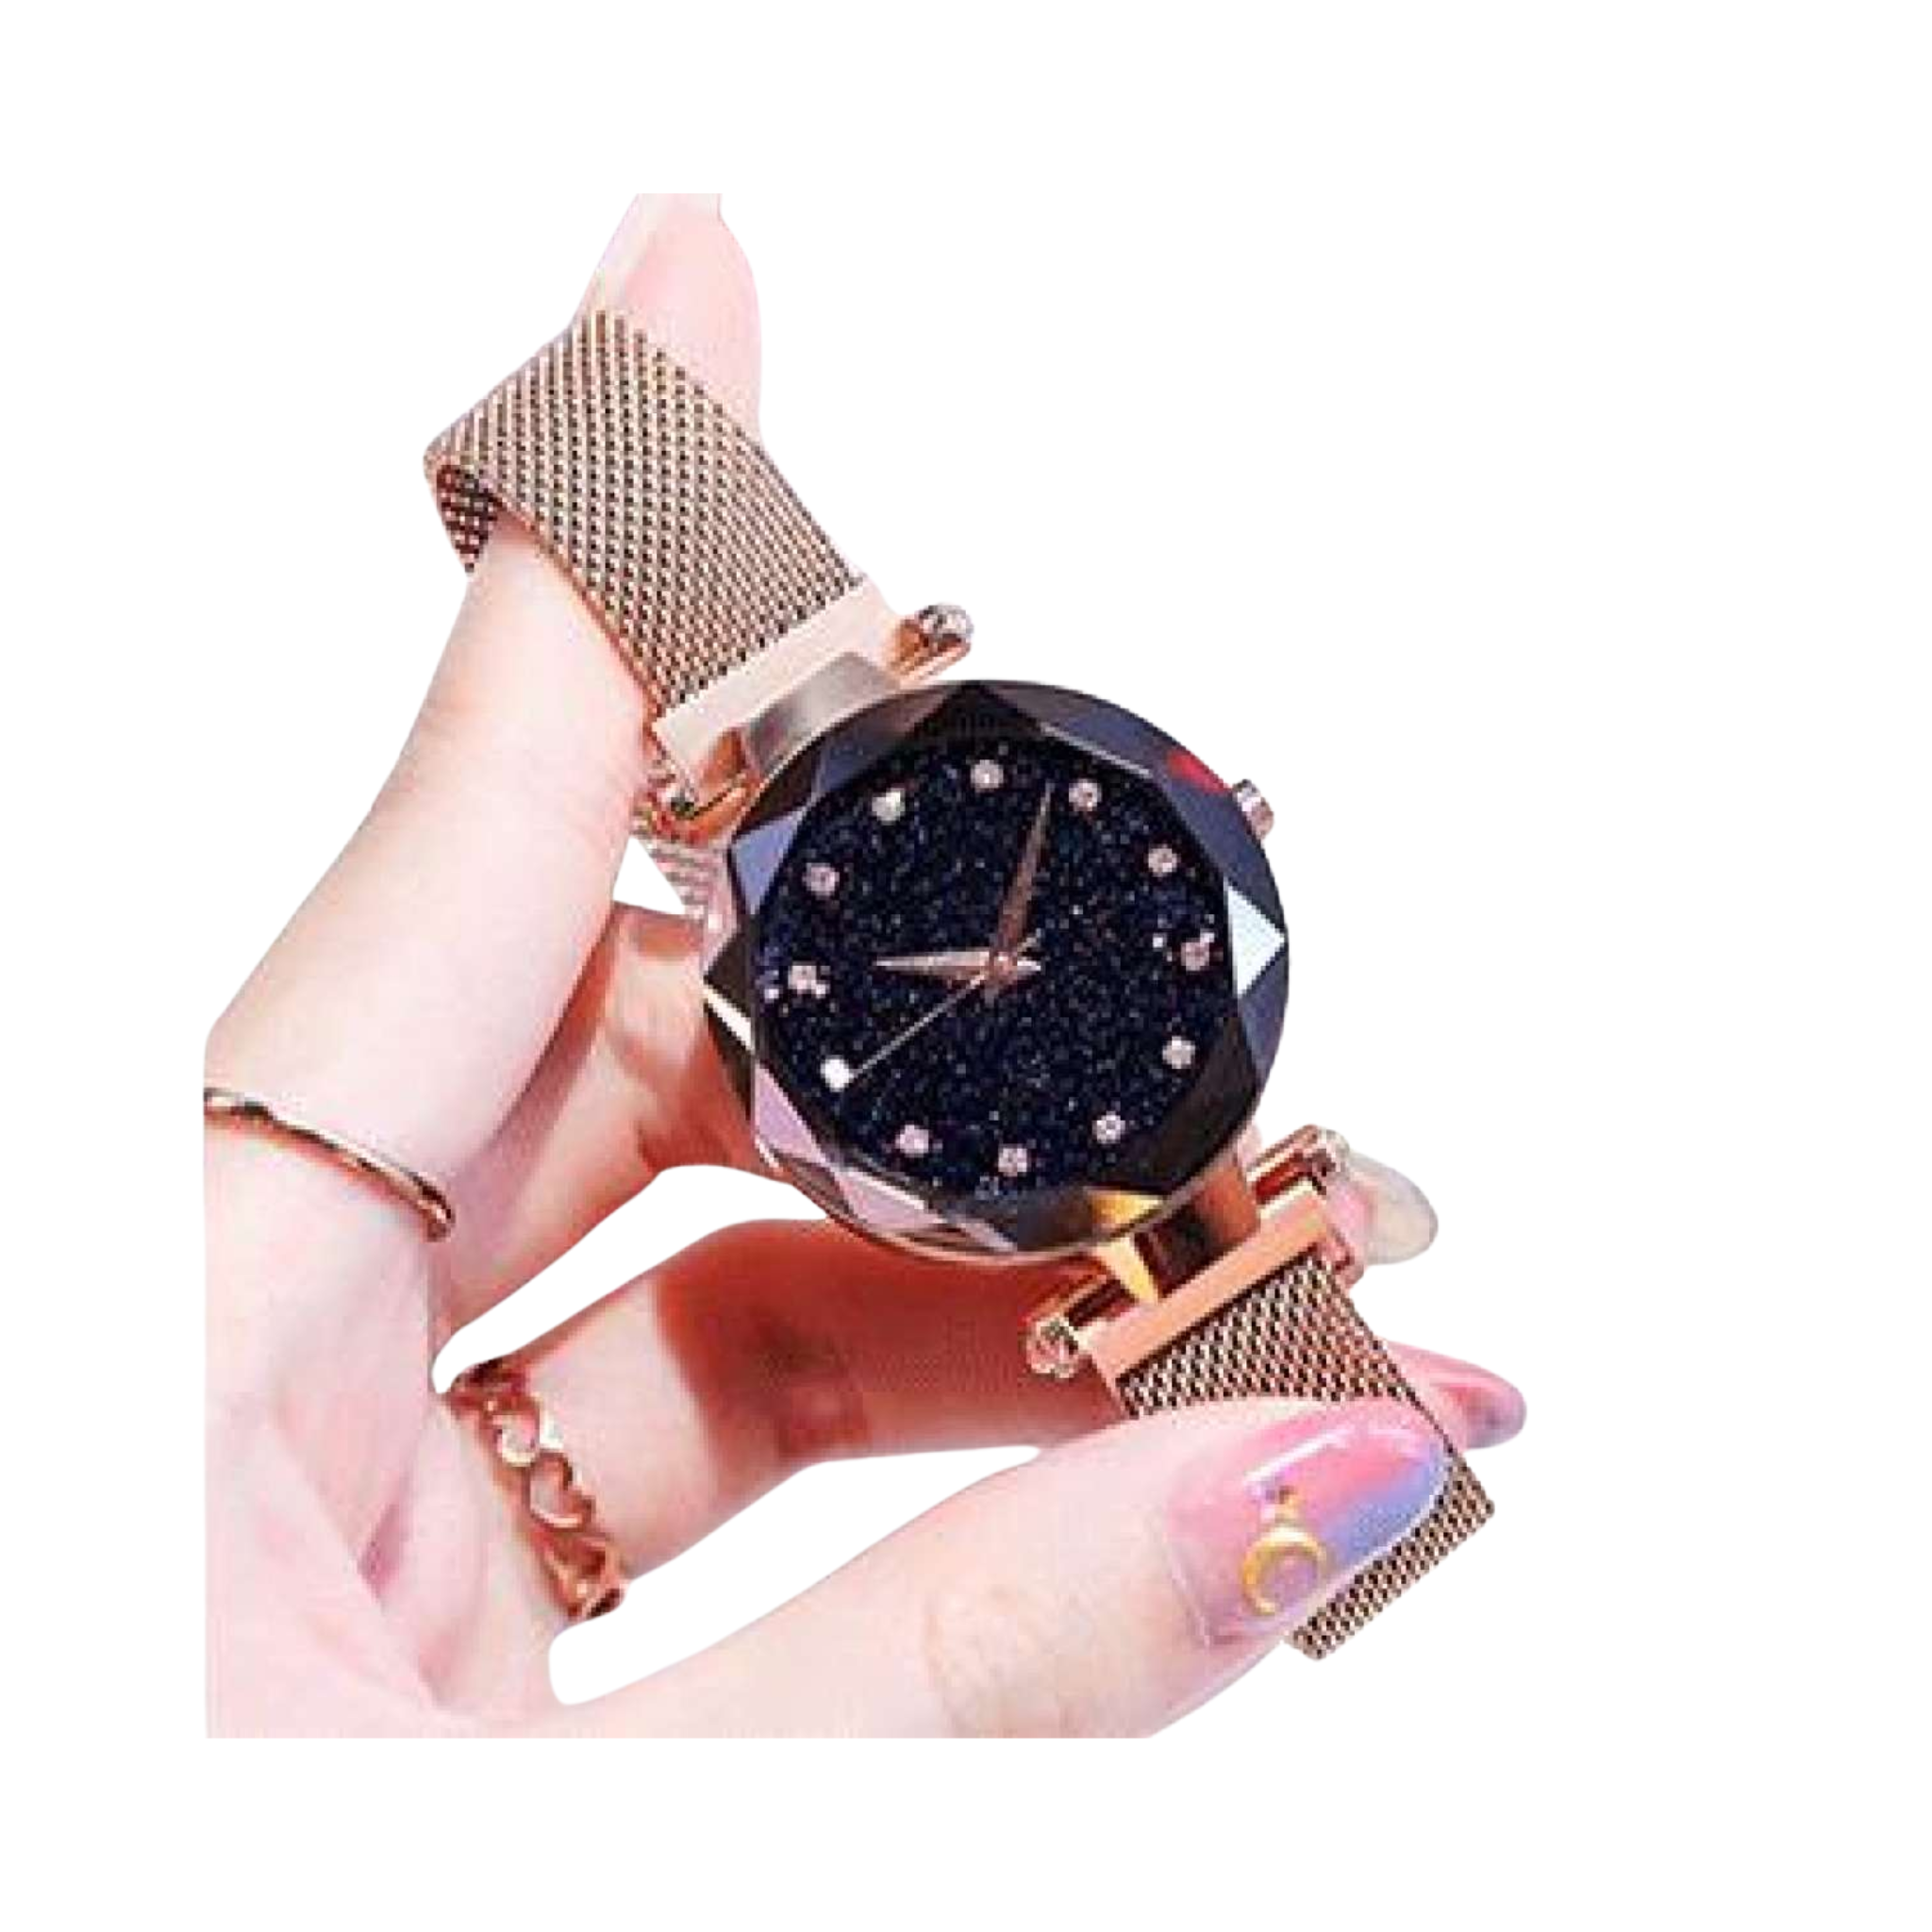 Strap Watch, Magnetic Cute & Classy, for Women